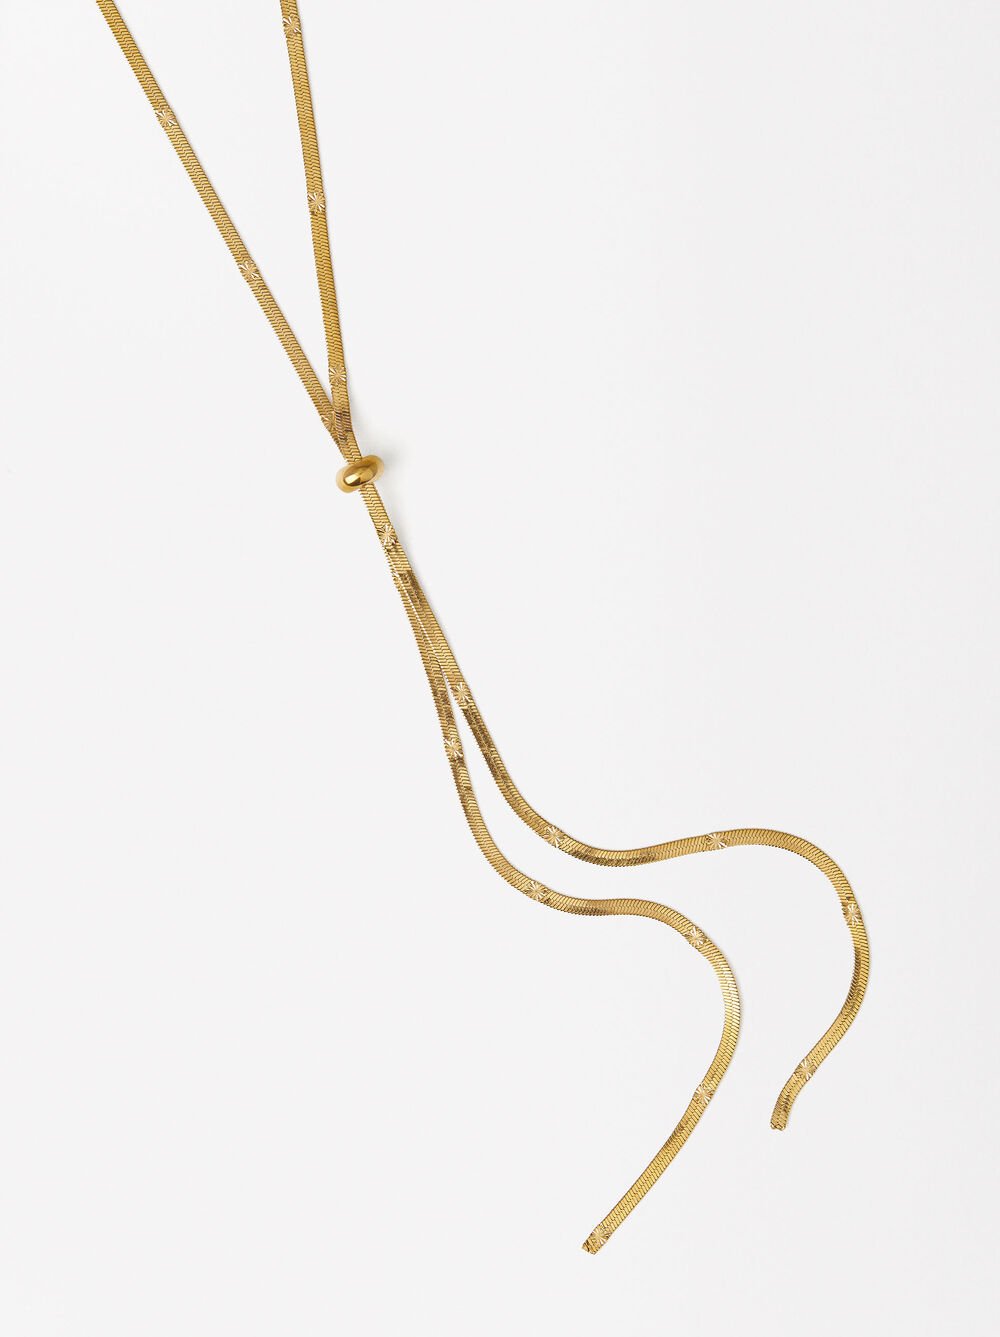 Goldfarbene Halskette Aus Edelstahl